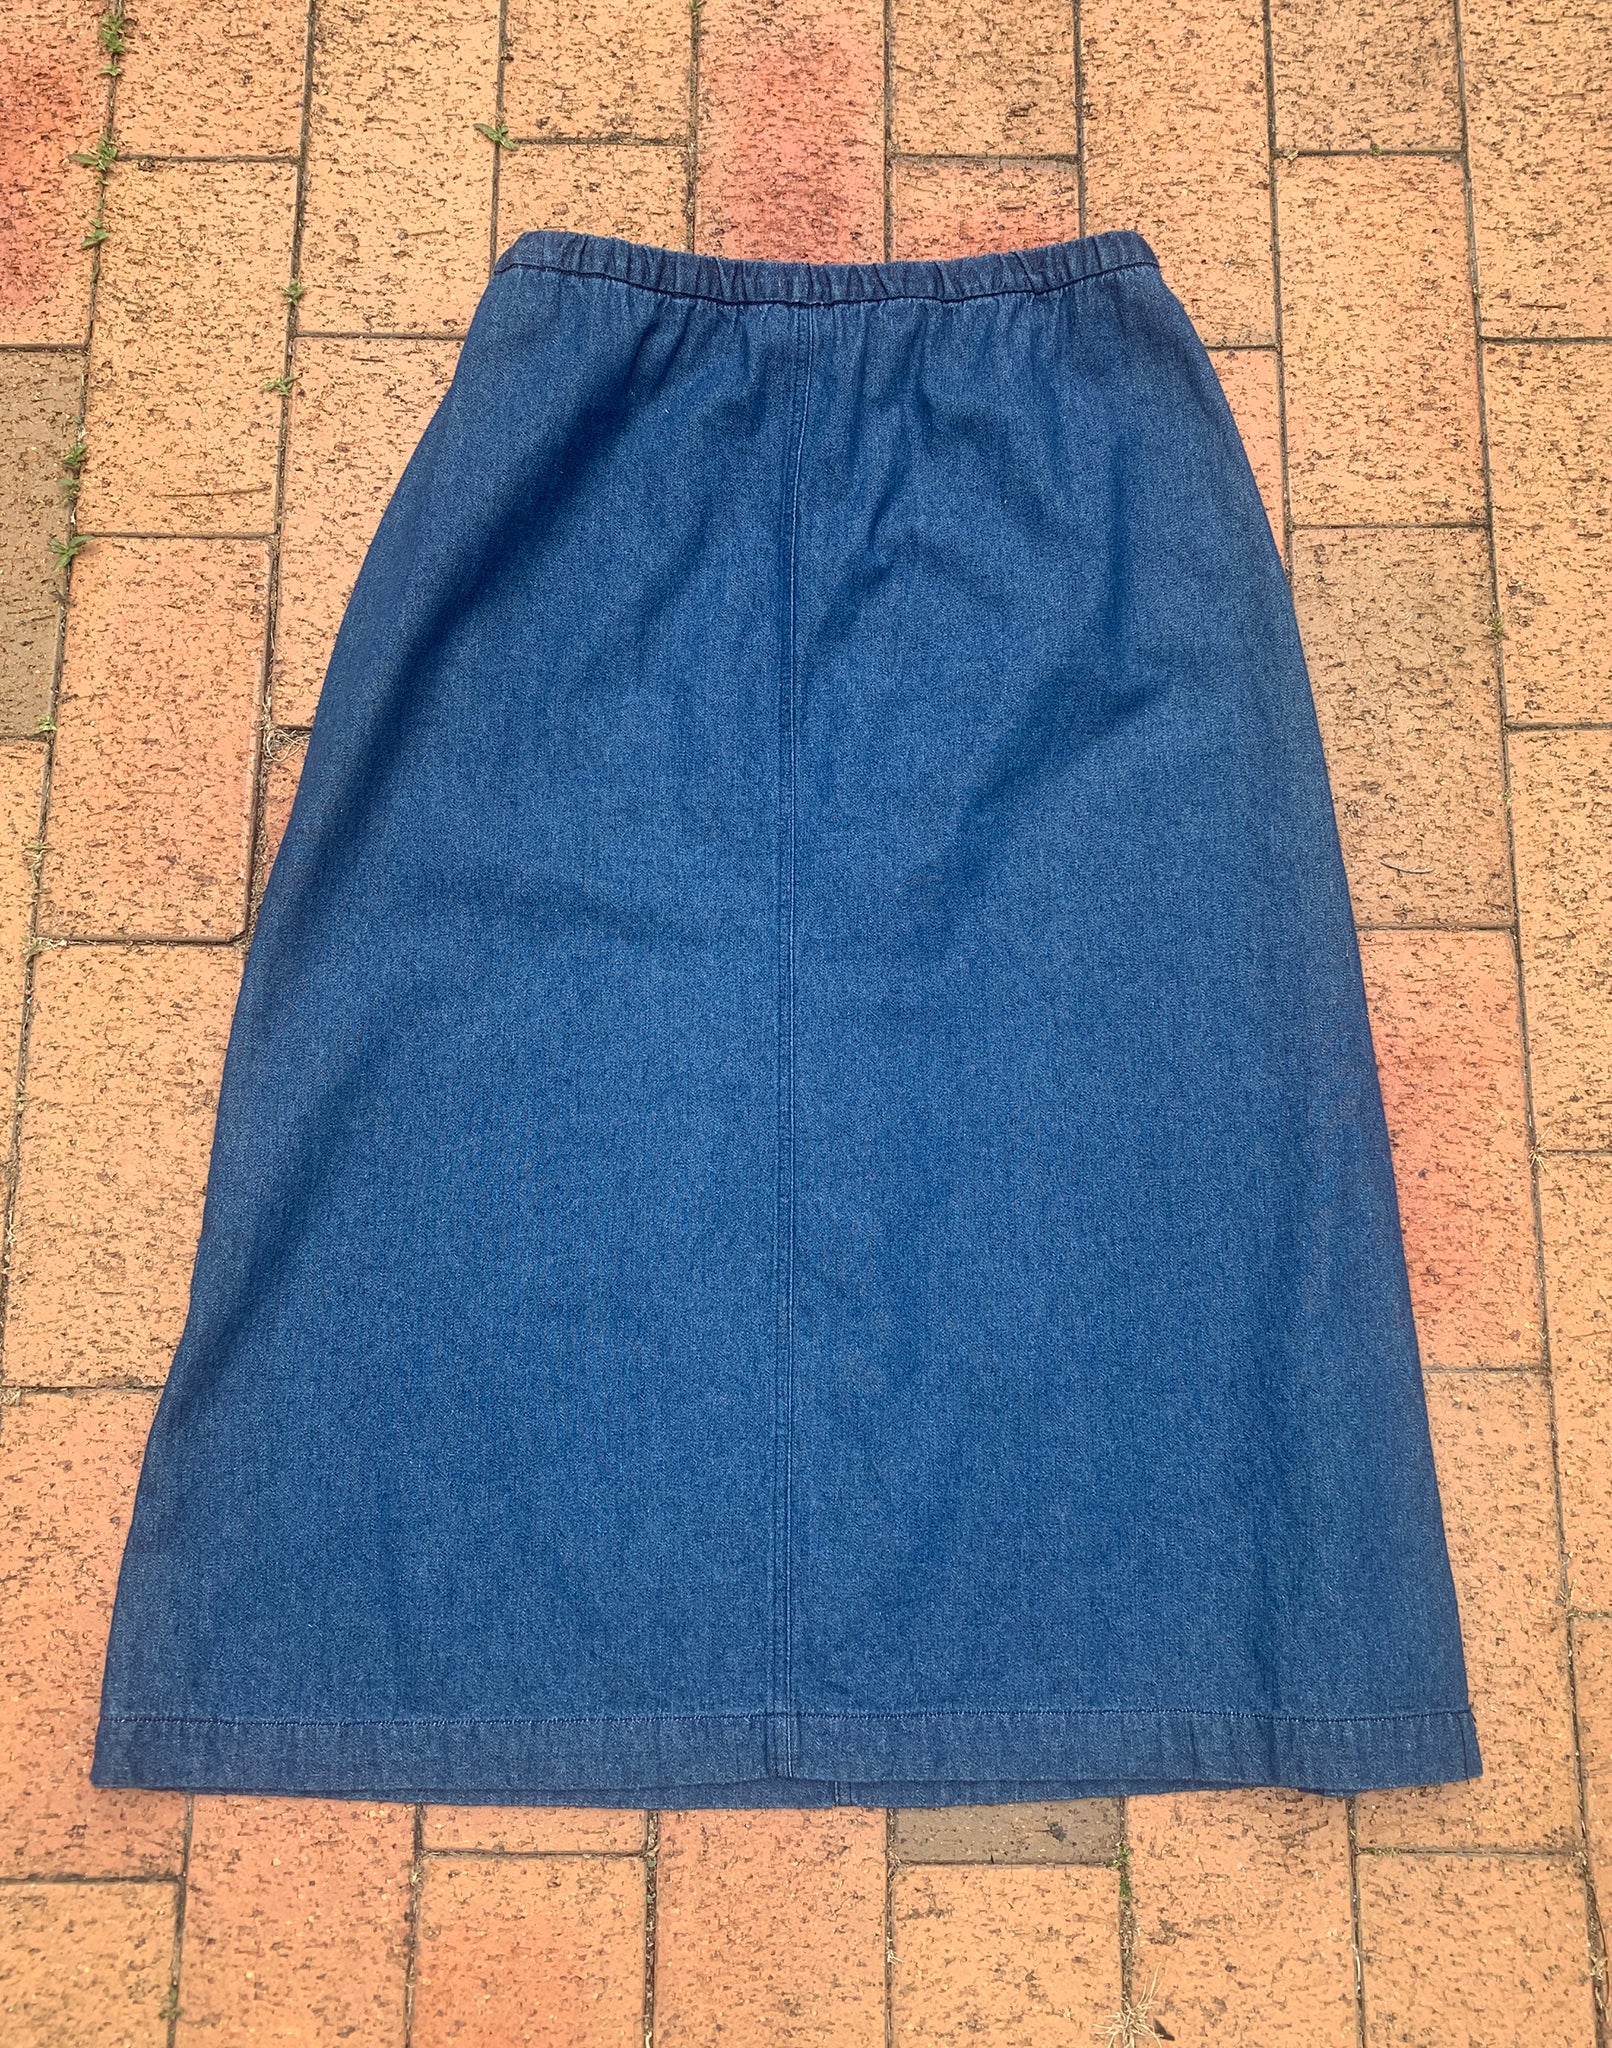 Vintage 90's Denim Midi Skirt - Size M / L